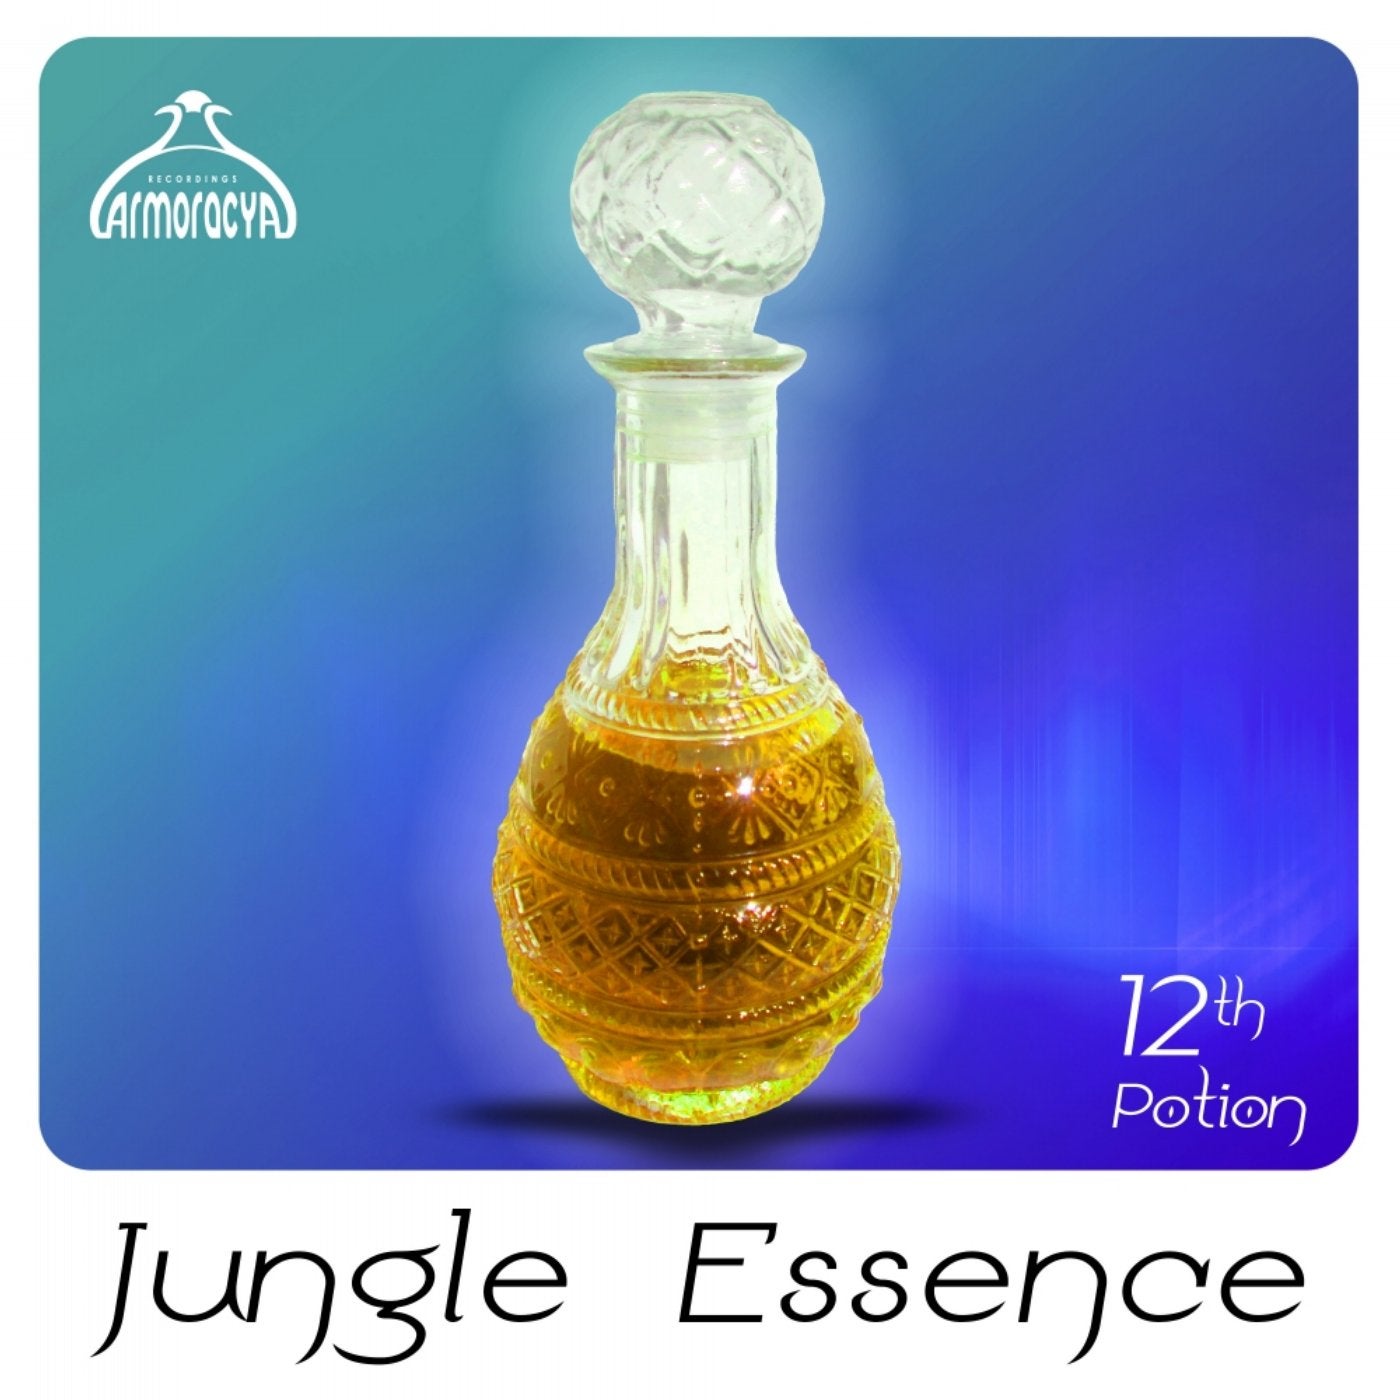 Jungle Essence 12th Potion